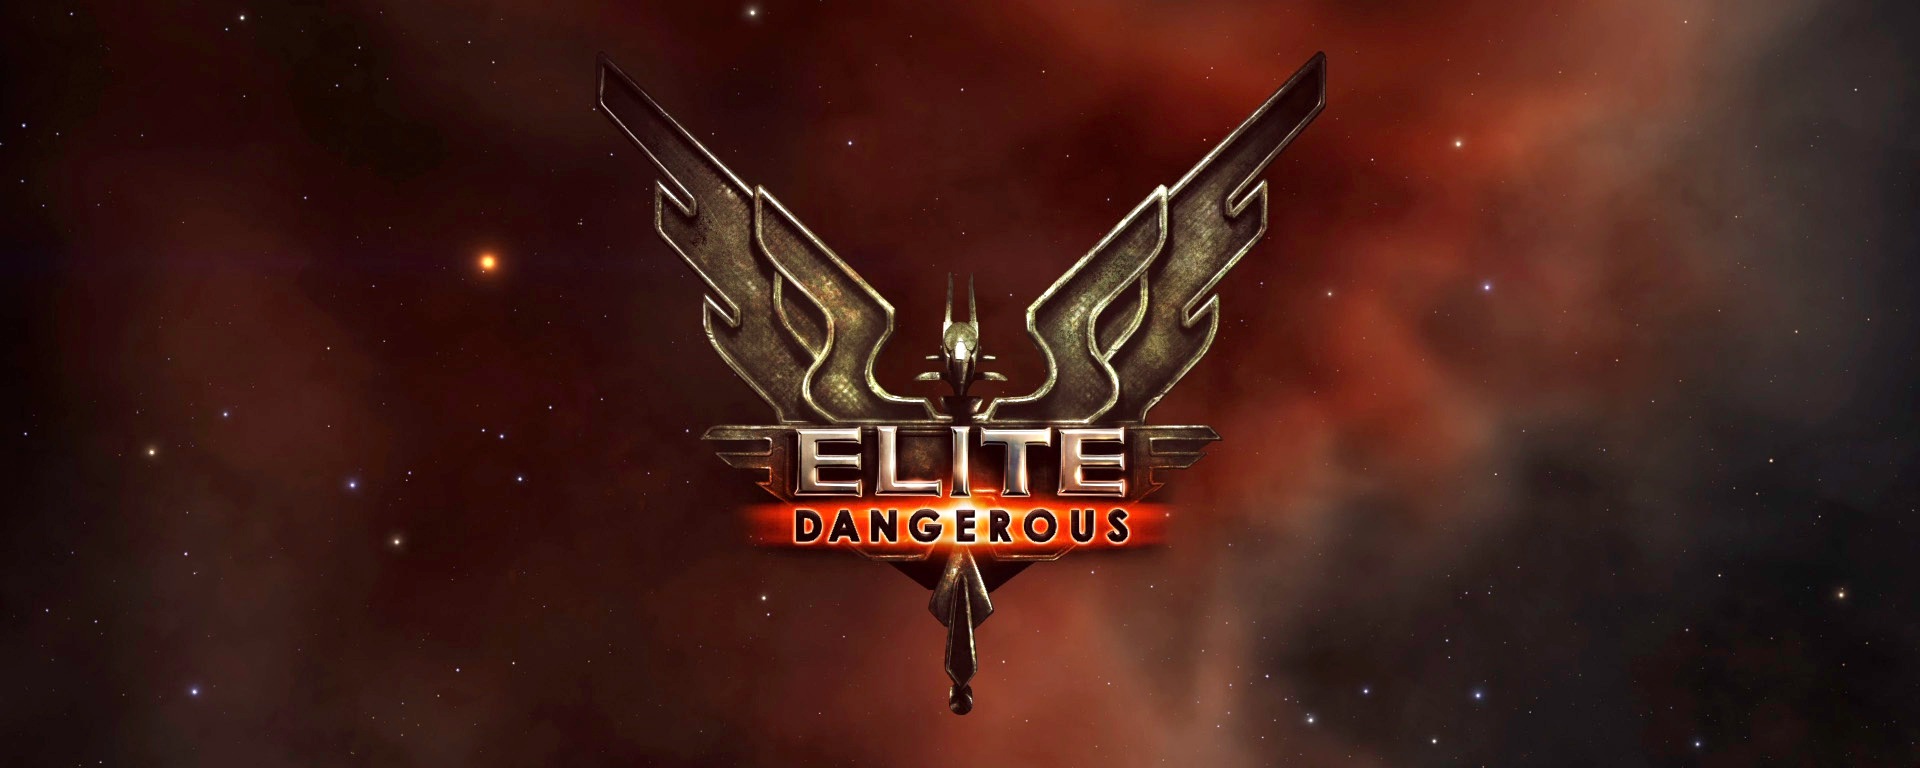 Elite: Dangerous dev diary shows multiplayer gameplay as